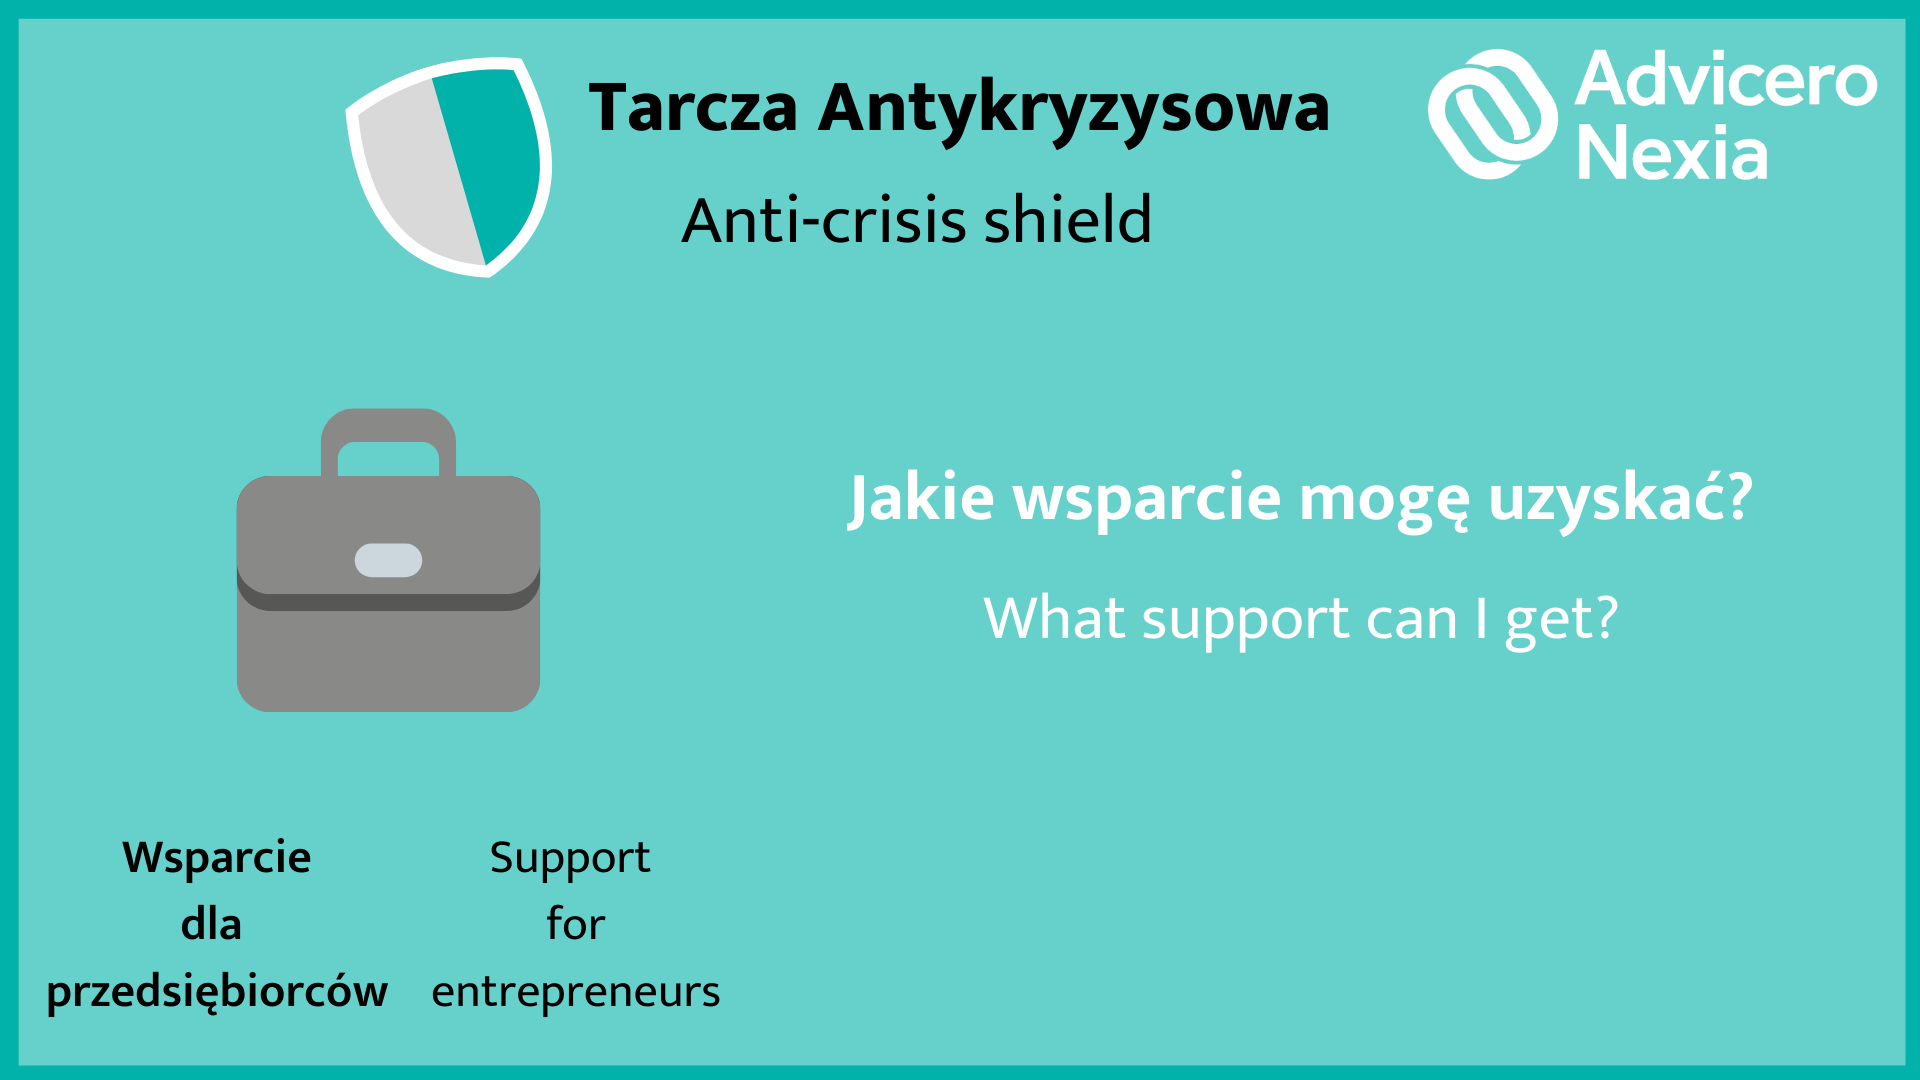 Tarcza Antykryzysowa v3 - Anti-Crisis measures in Poland